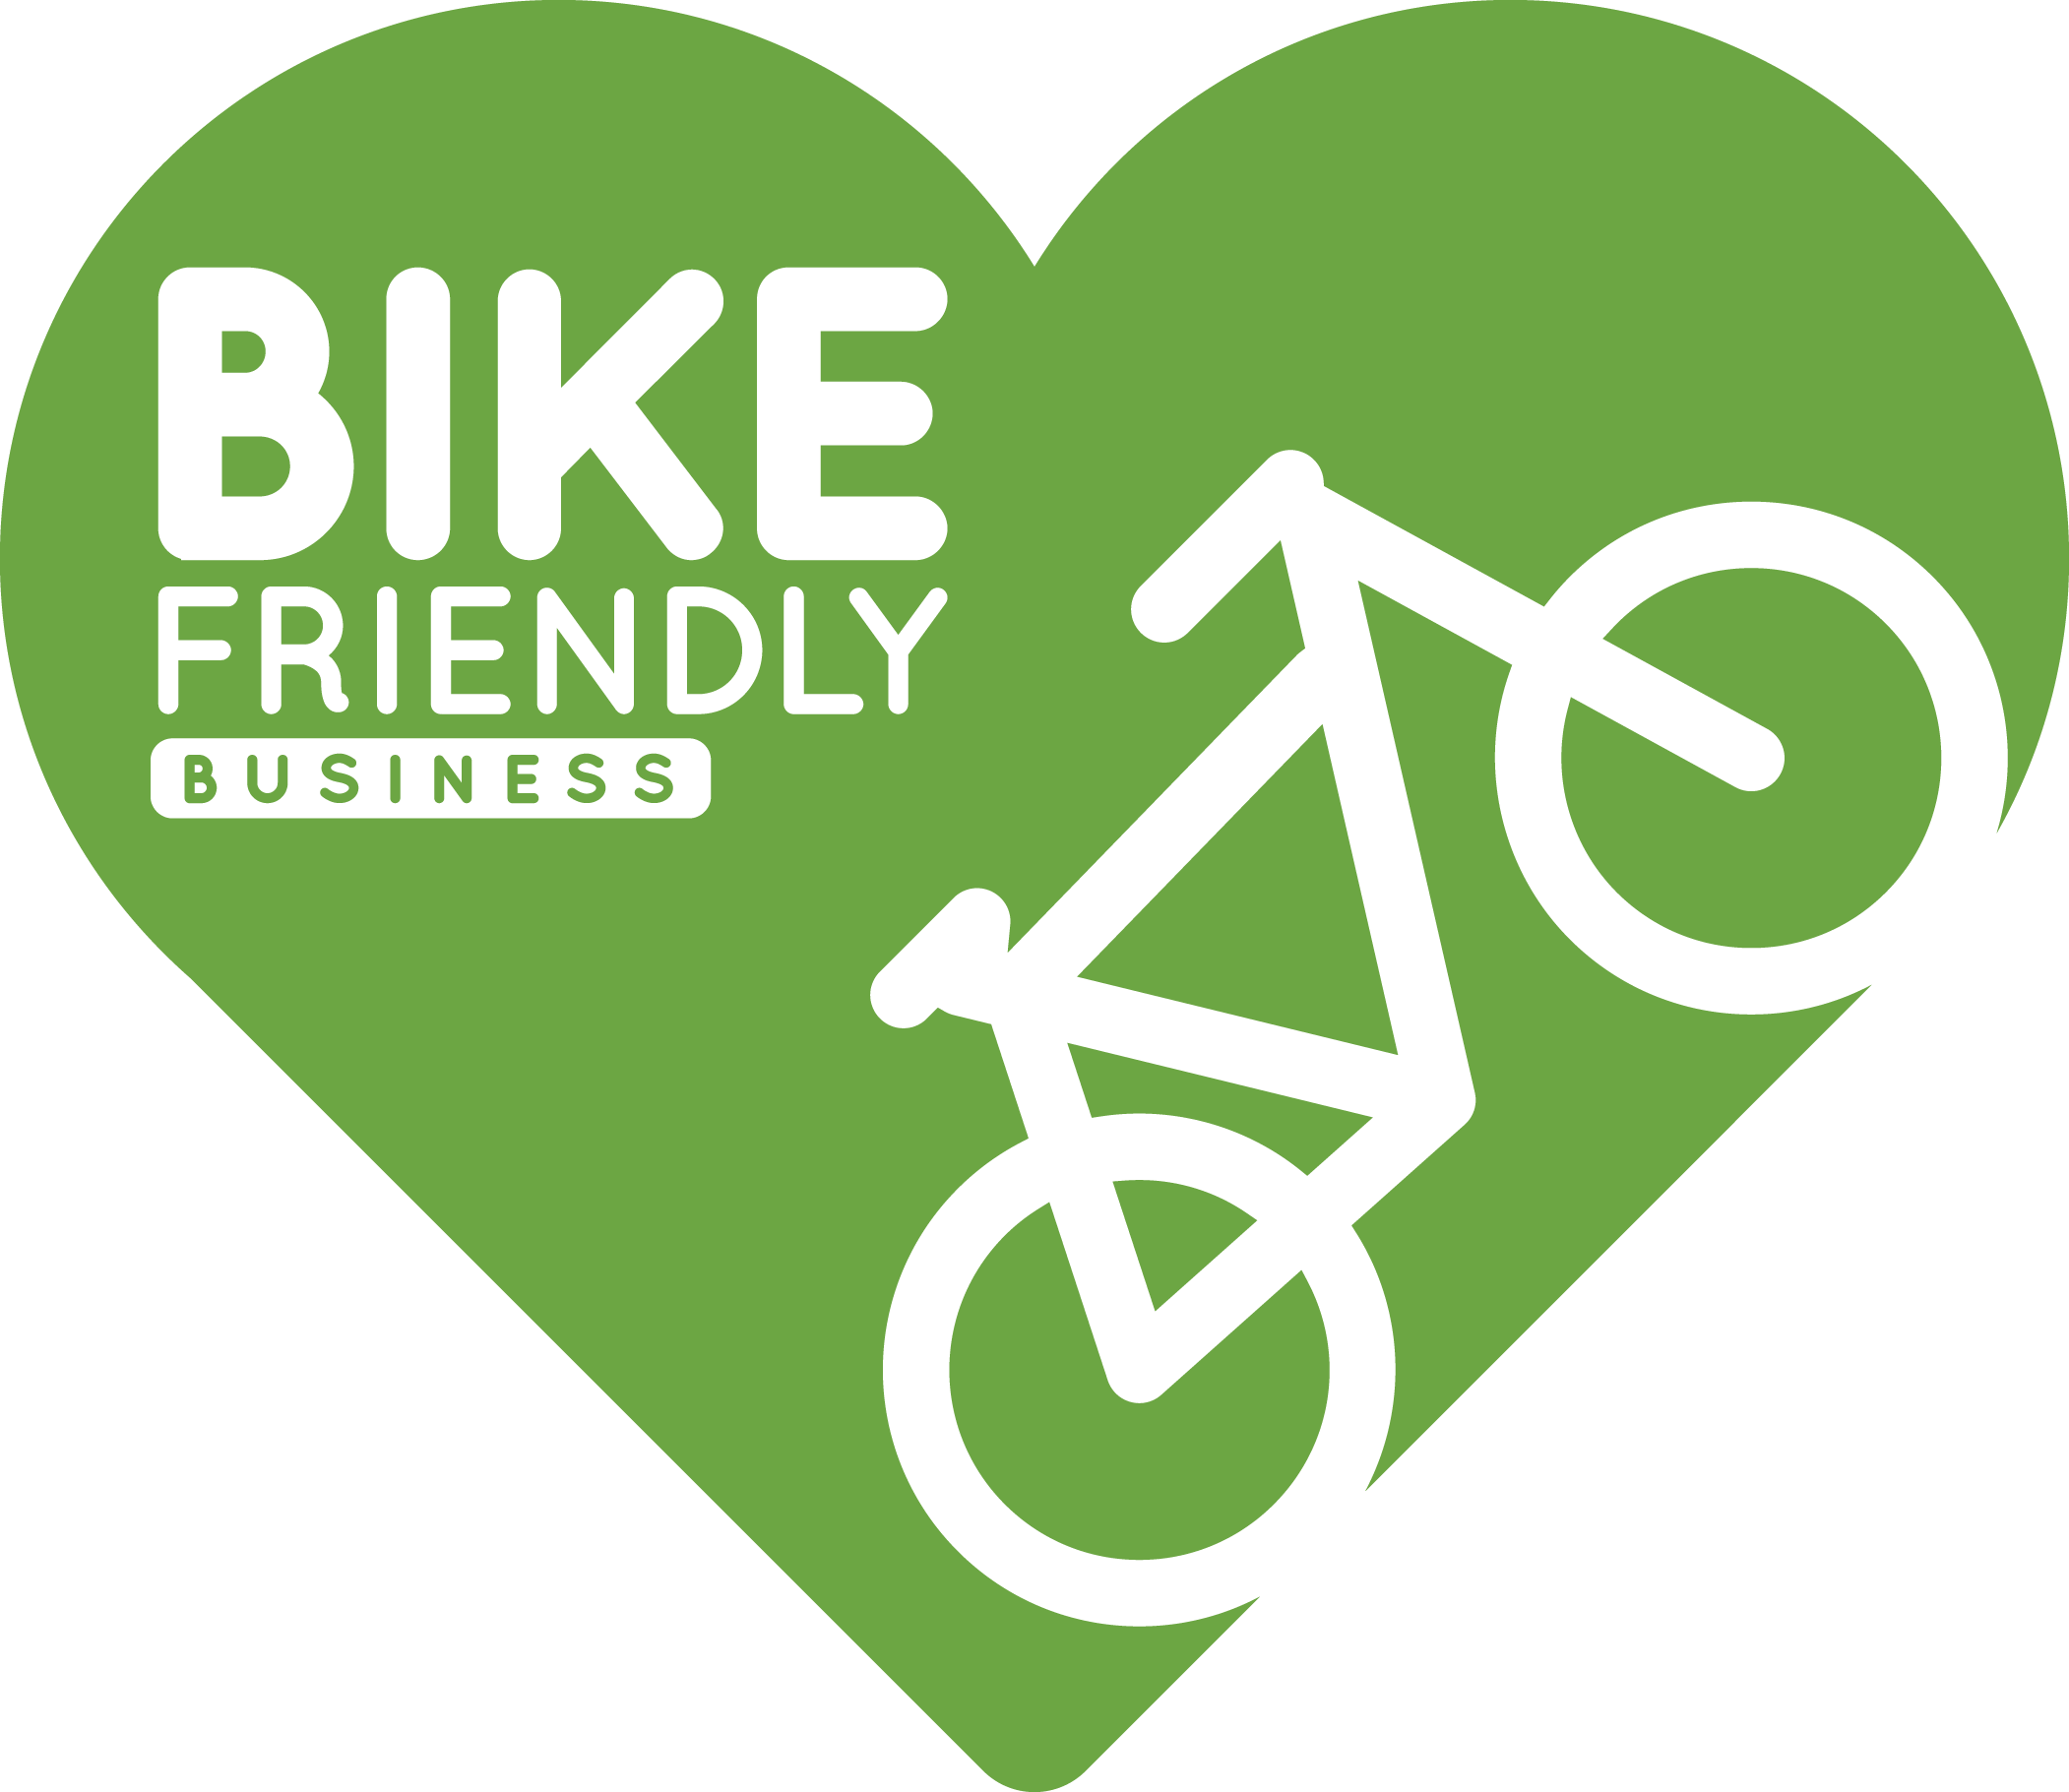 Bike Friendly Business logo.png